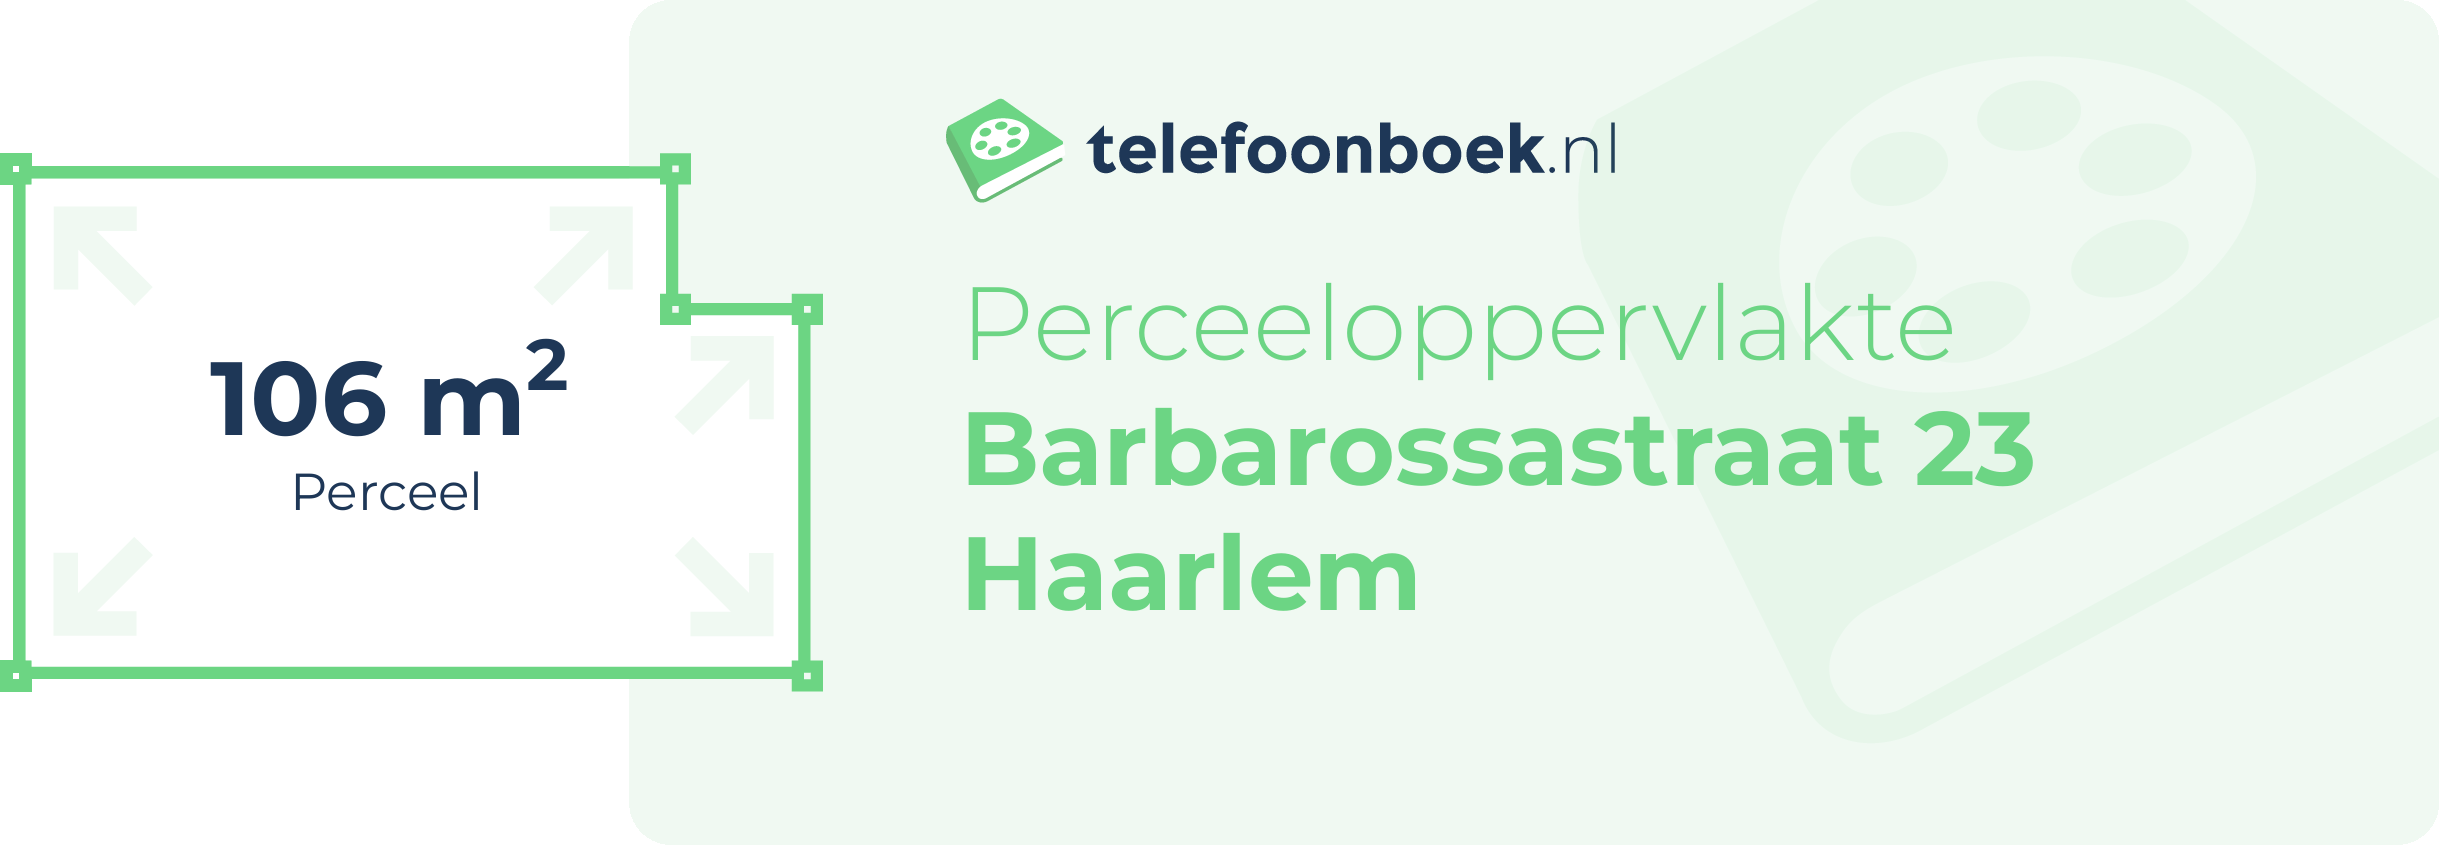 Perceeloppervlakte Barbarossastraat 23 Haarlem